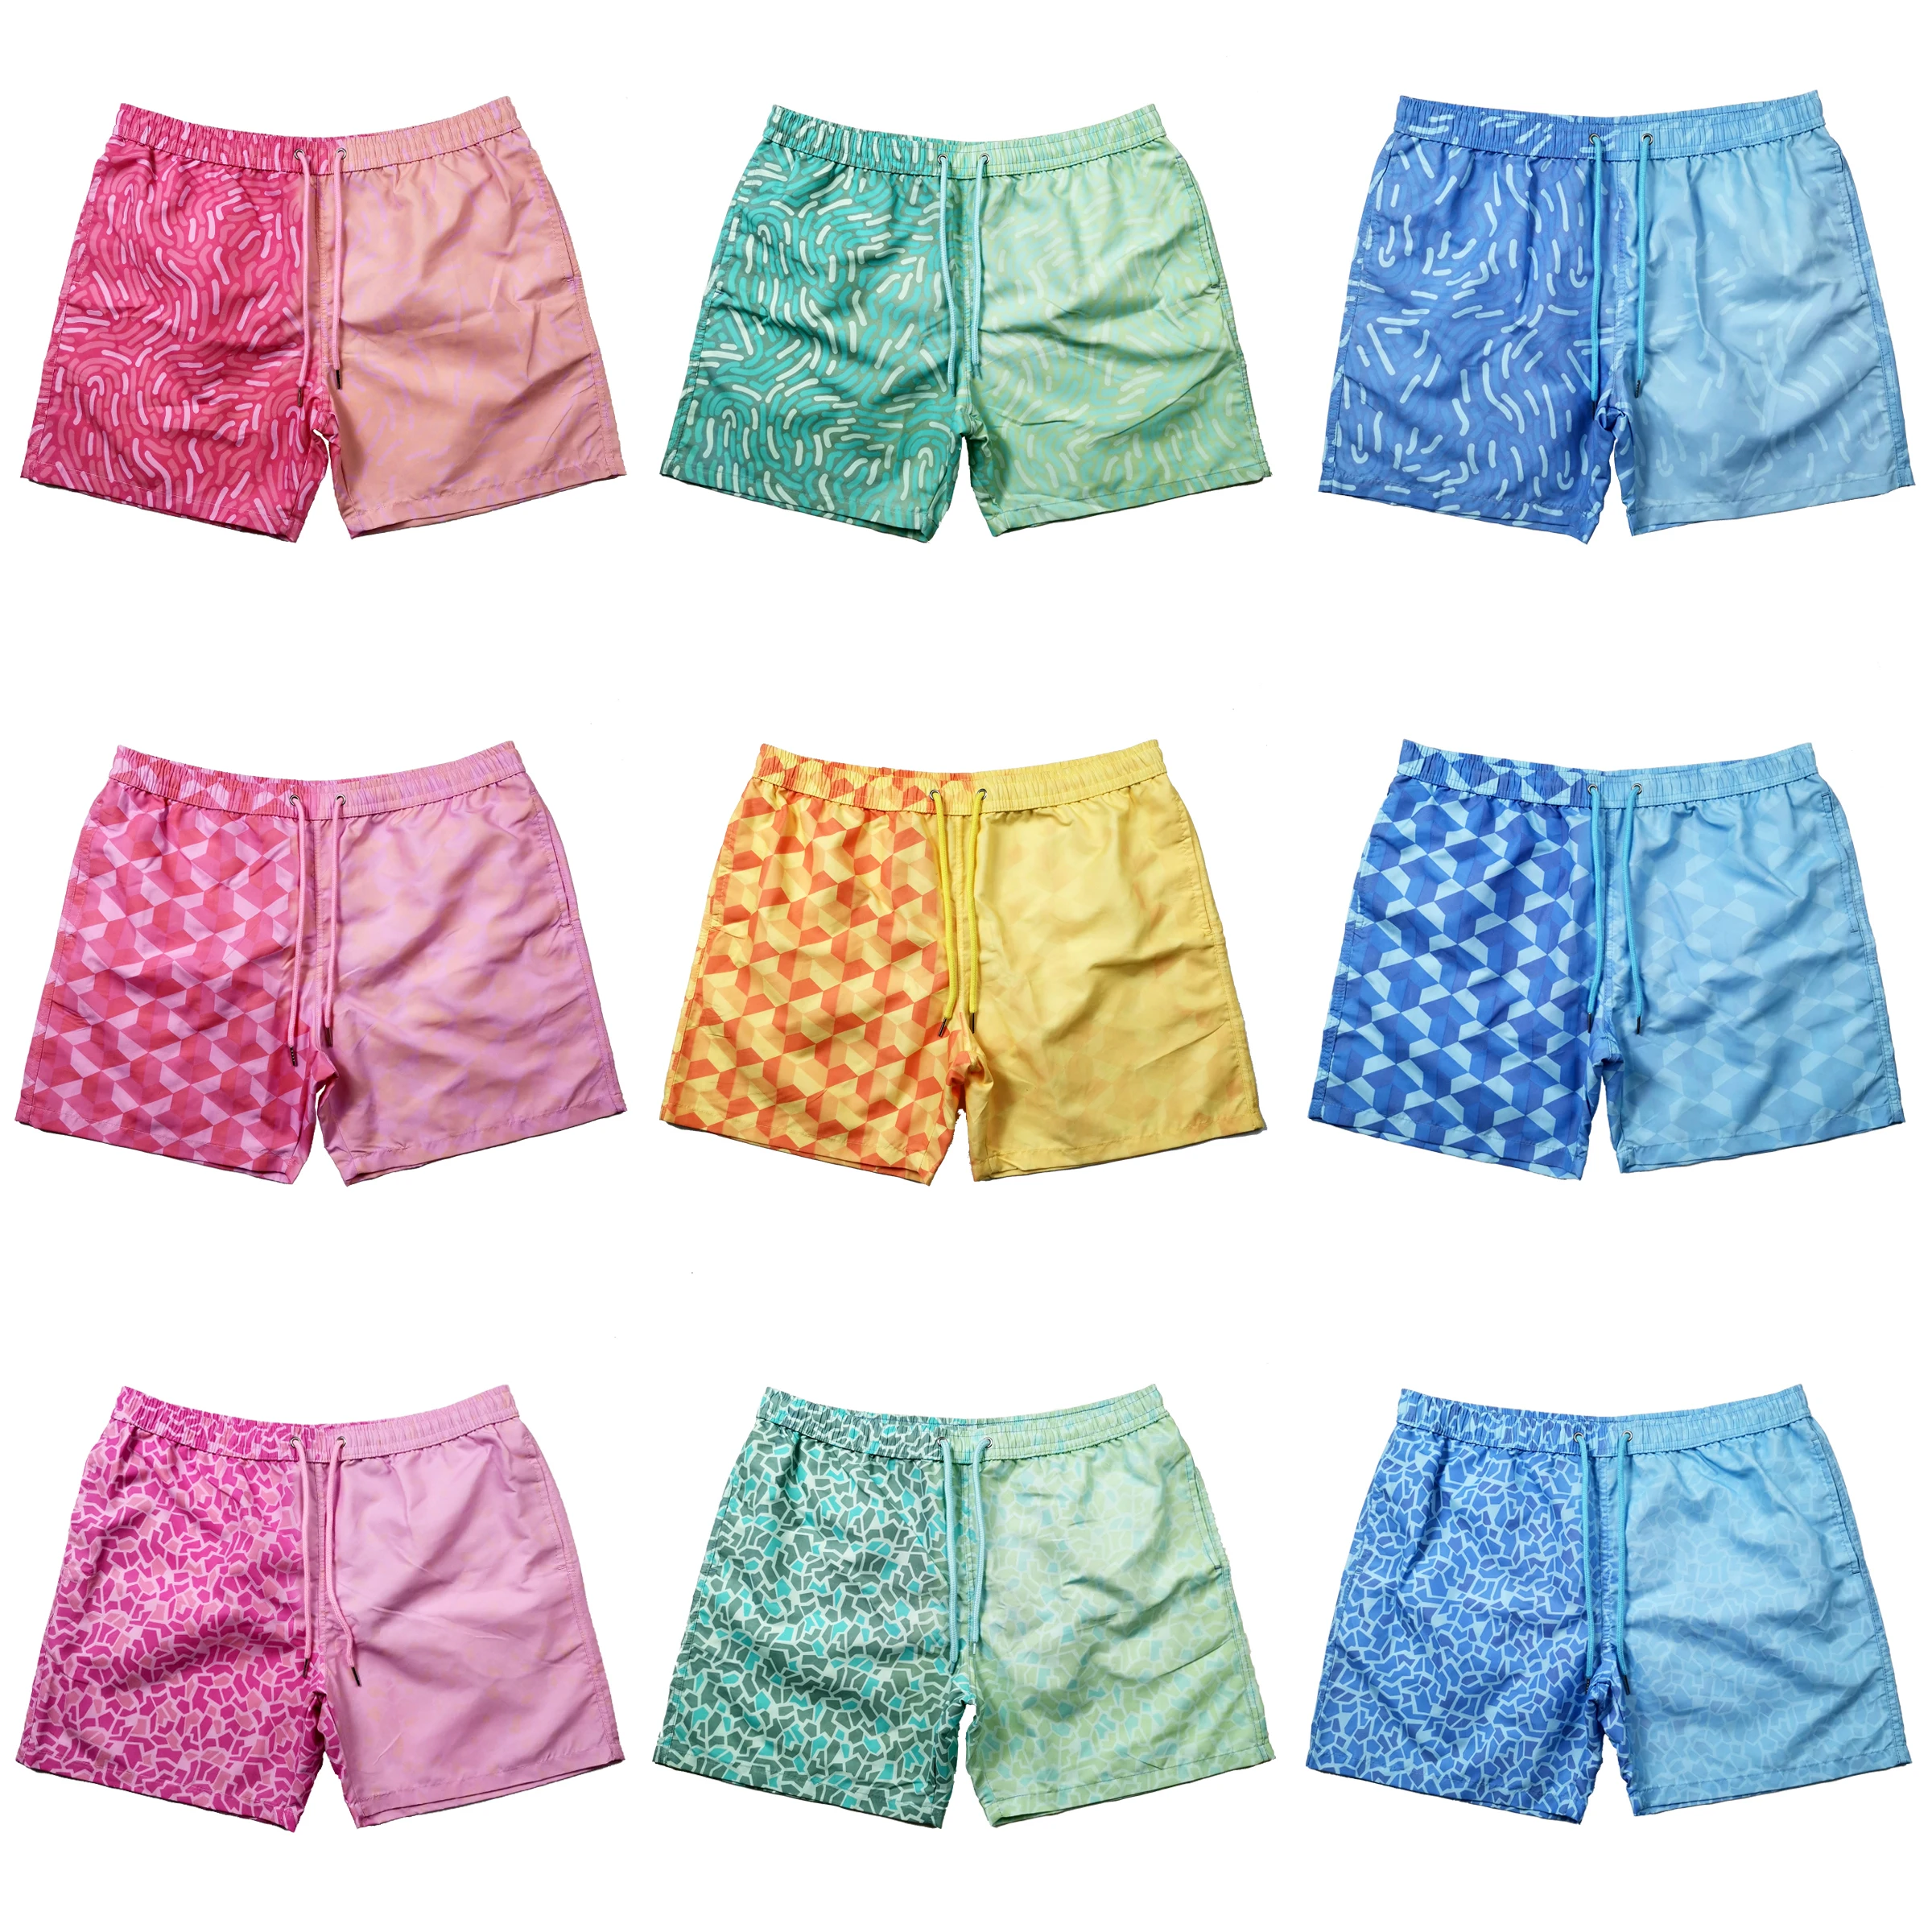 

Swim Trunks Swimwear Swimshorts Swimsuit Change Beach Swimshort Colors Color Changing Shorts